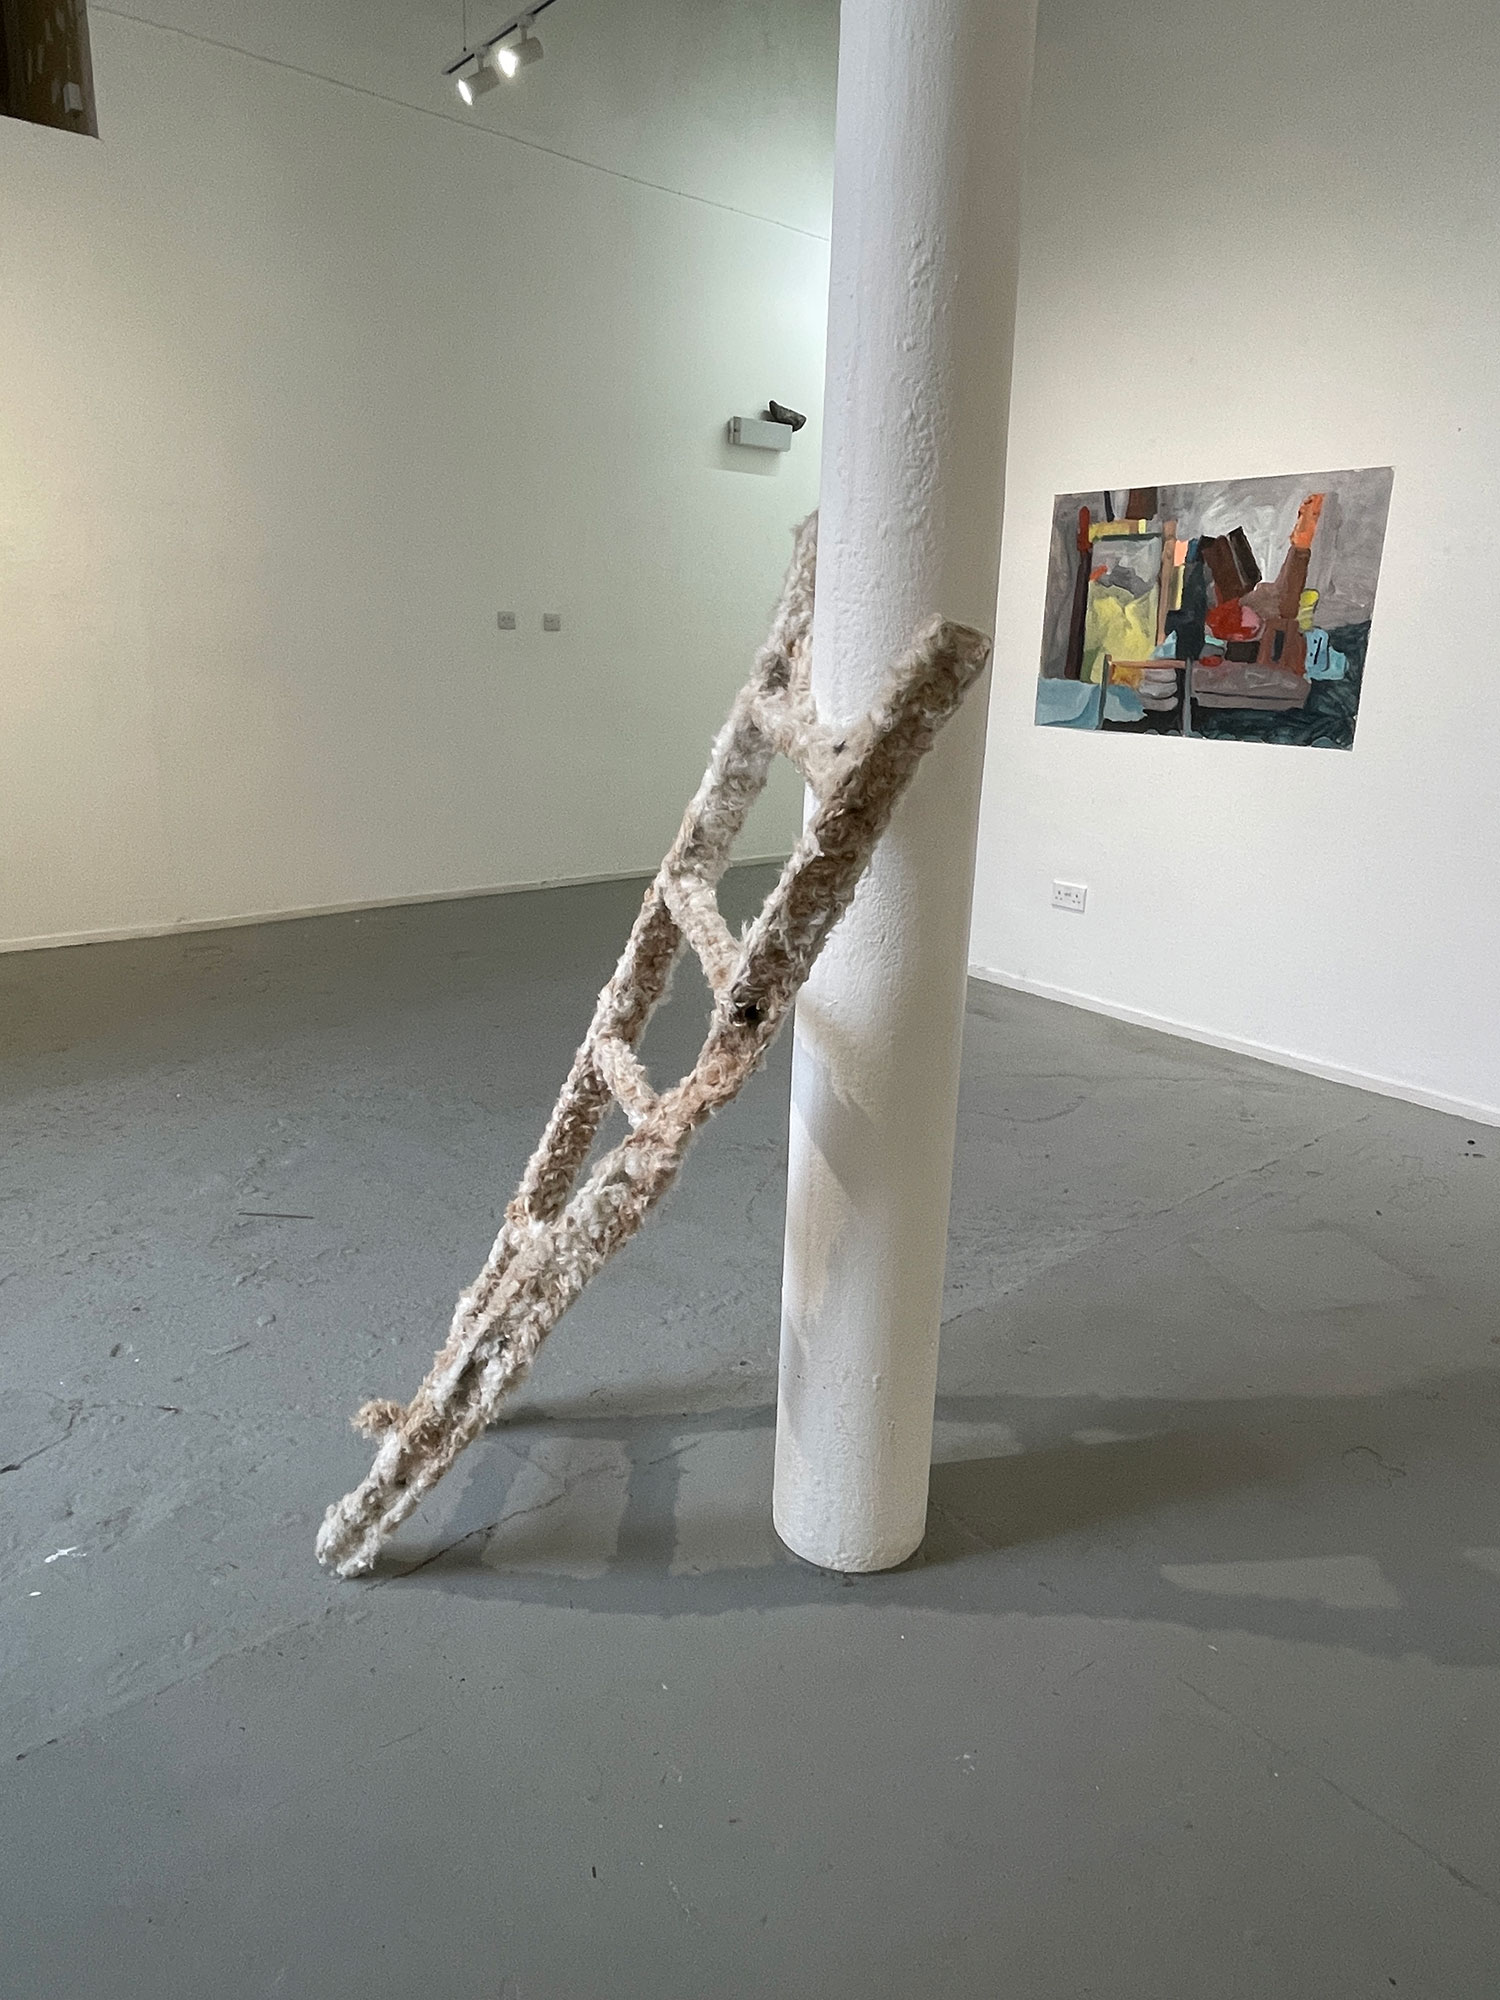 Susie Johnston & Ginny Elston, Objects of Conviction, steel ladder, dog hair, pva glue